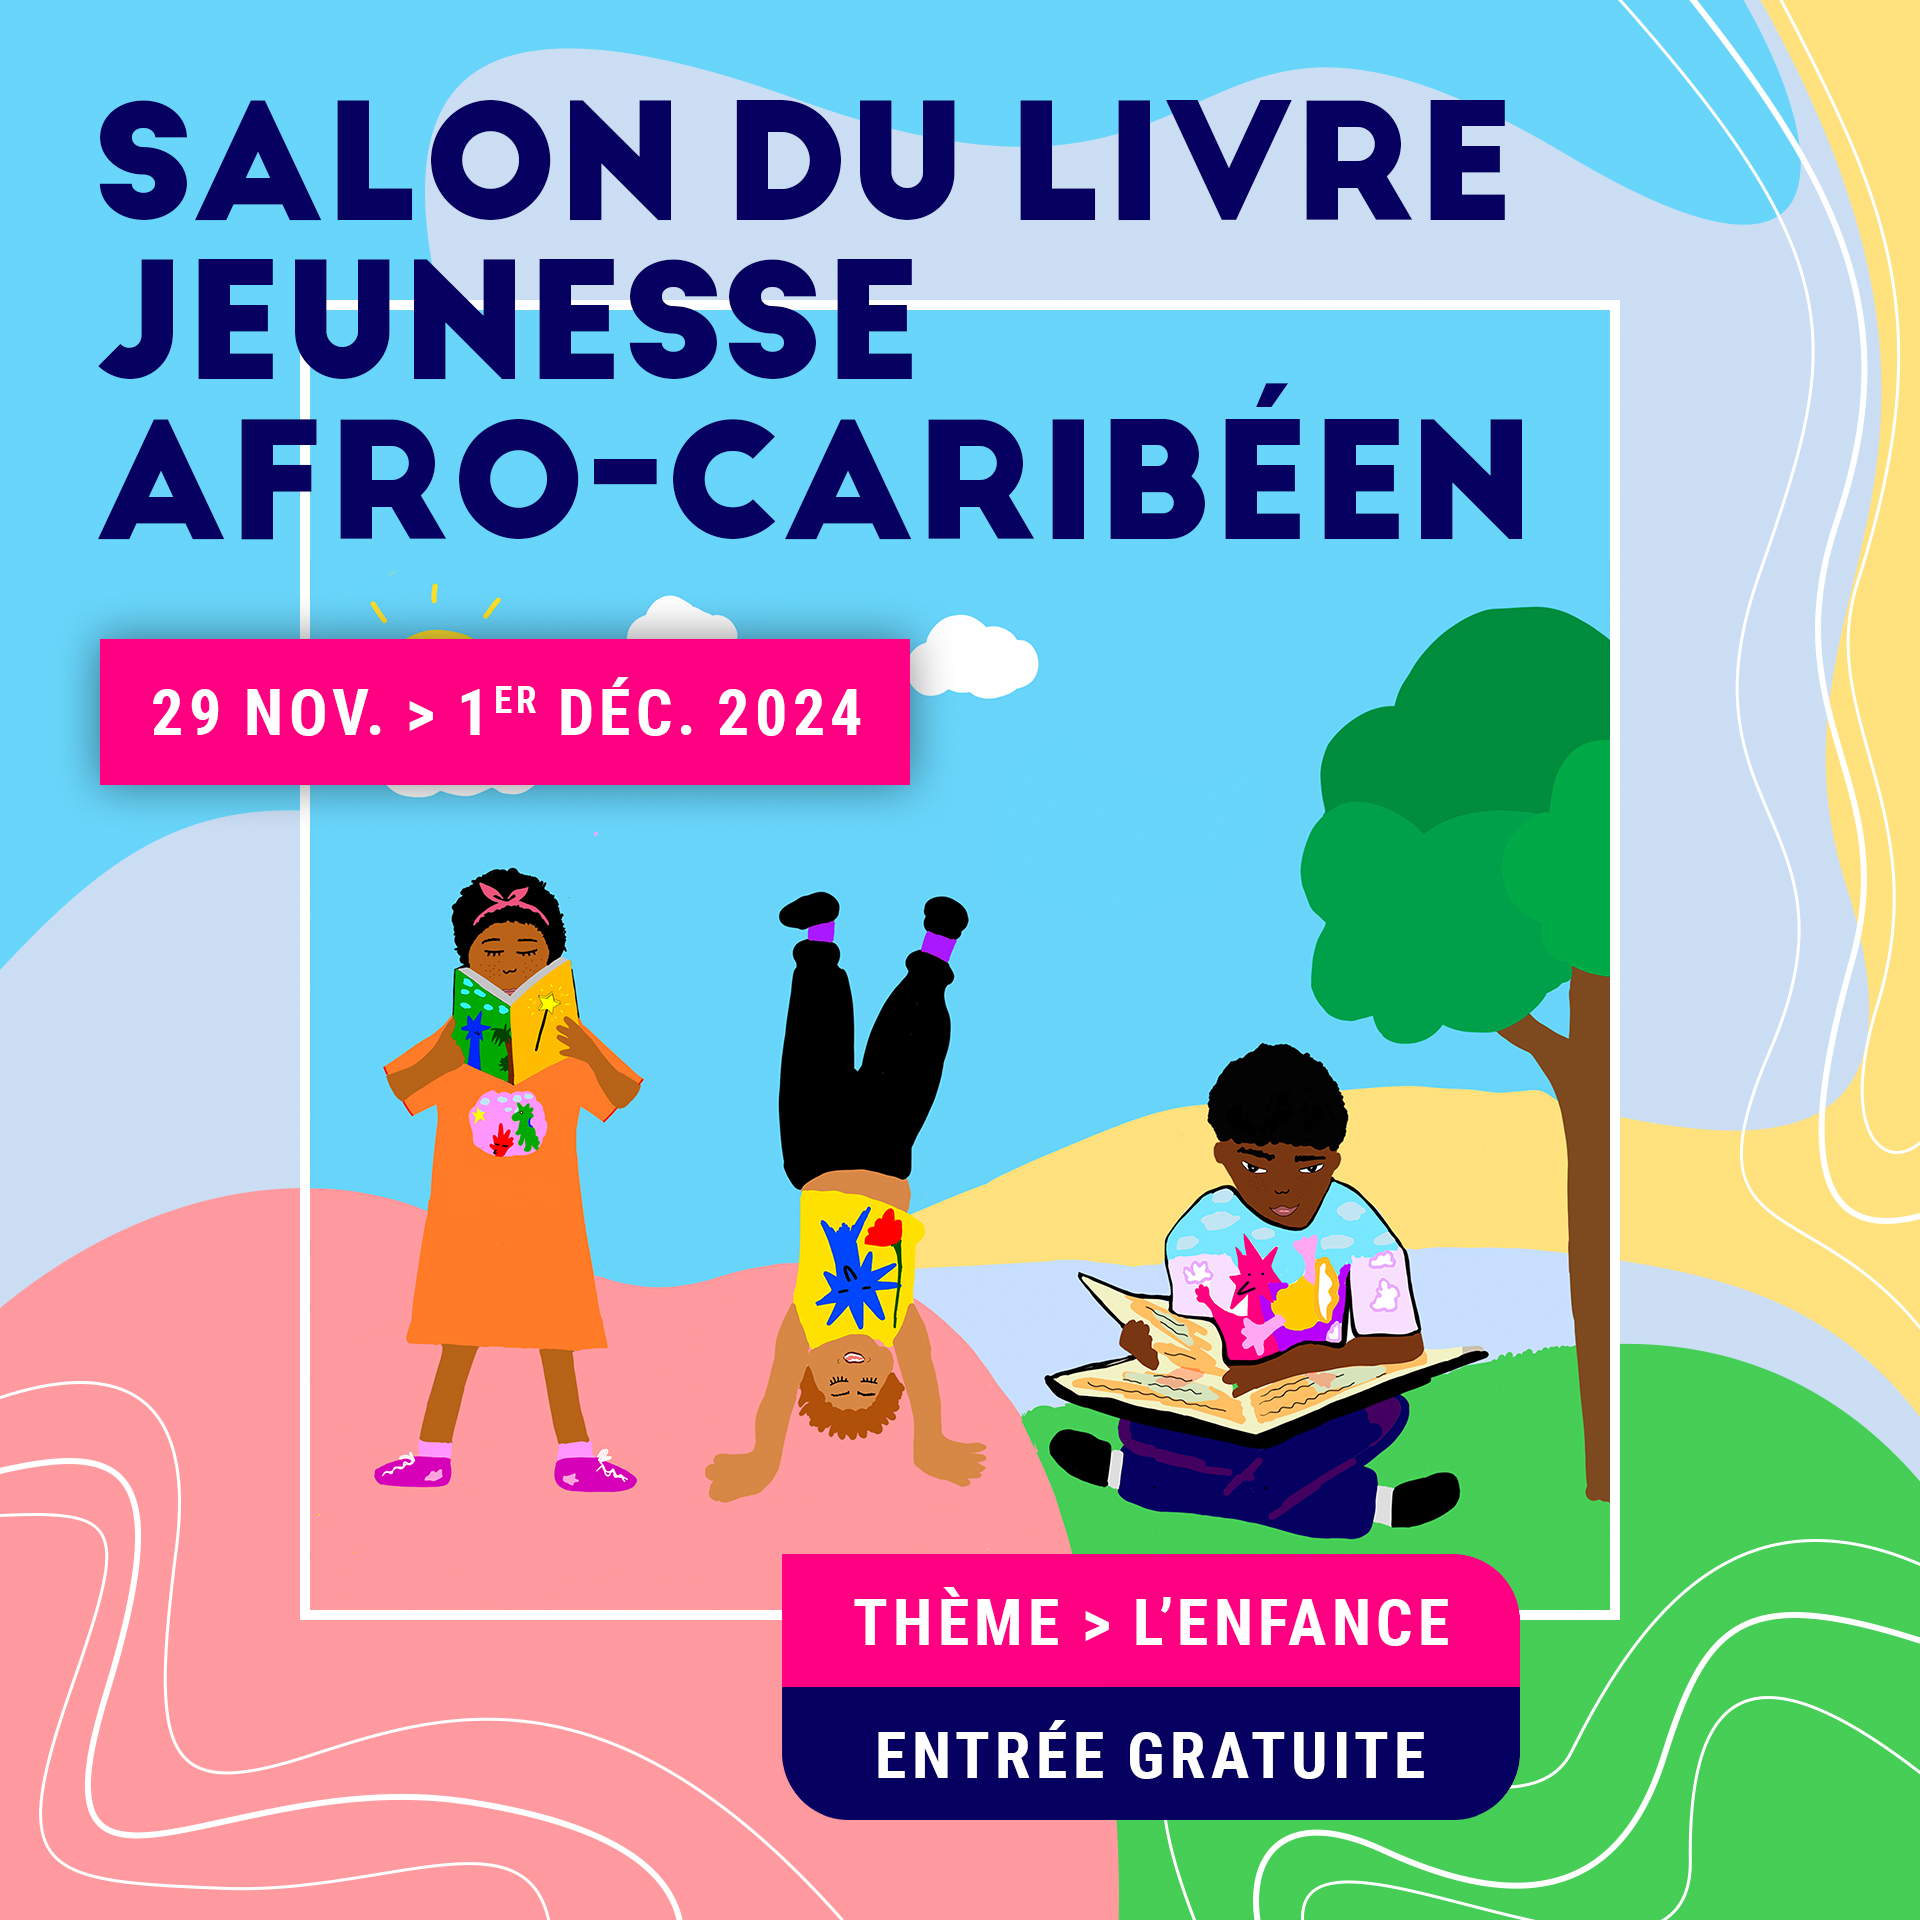 Salon du livre jeunesse afro-caribéen